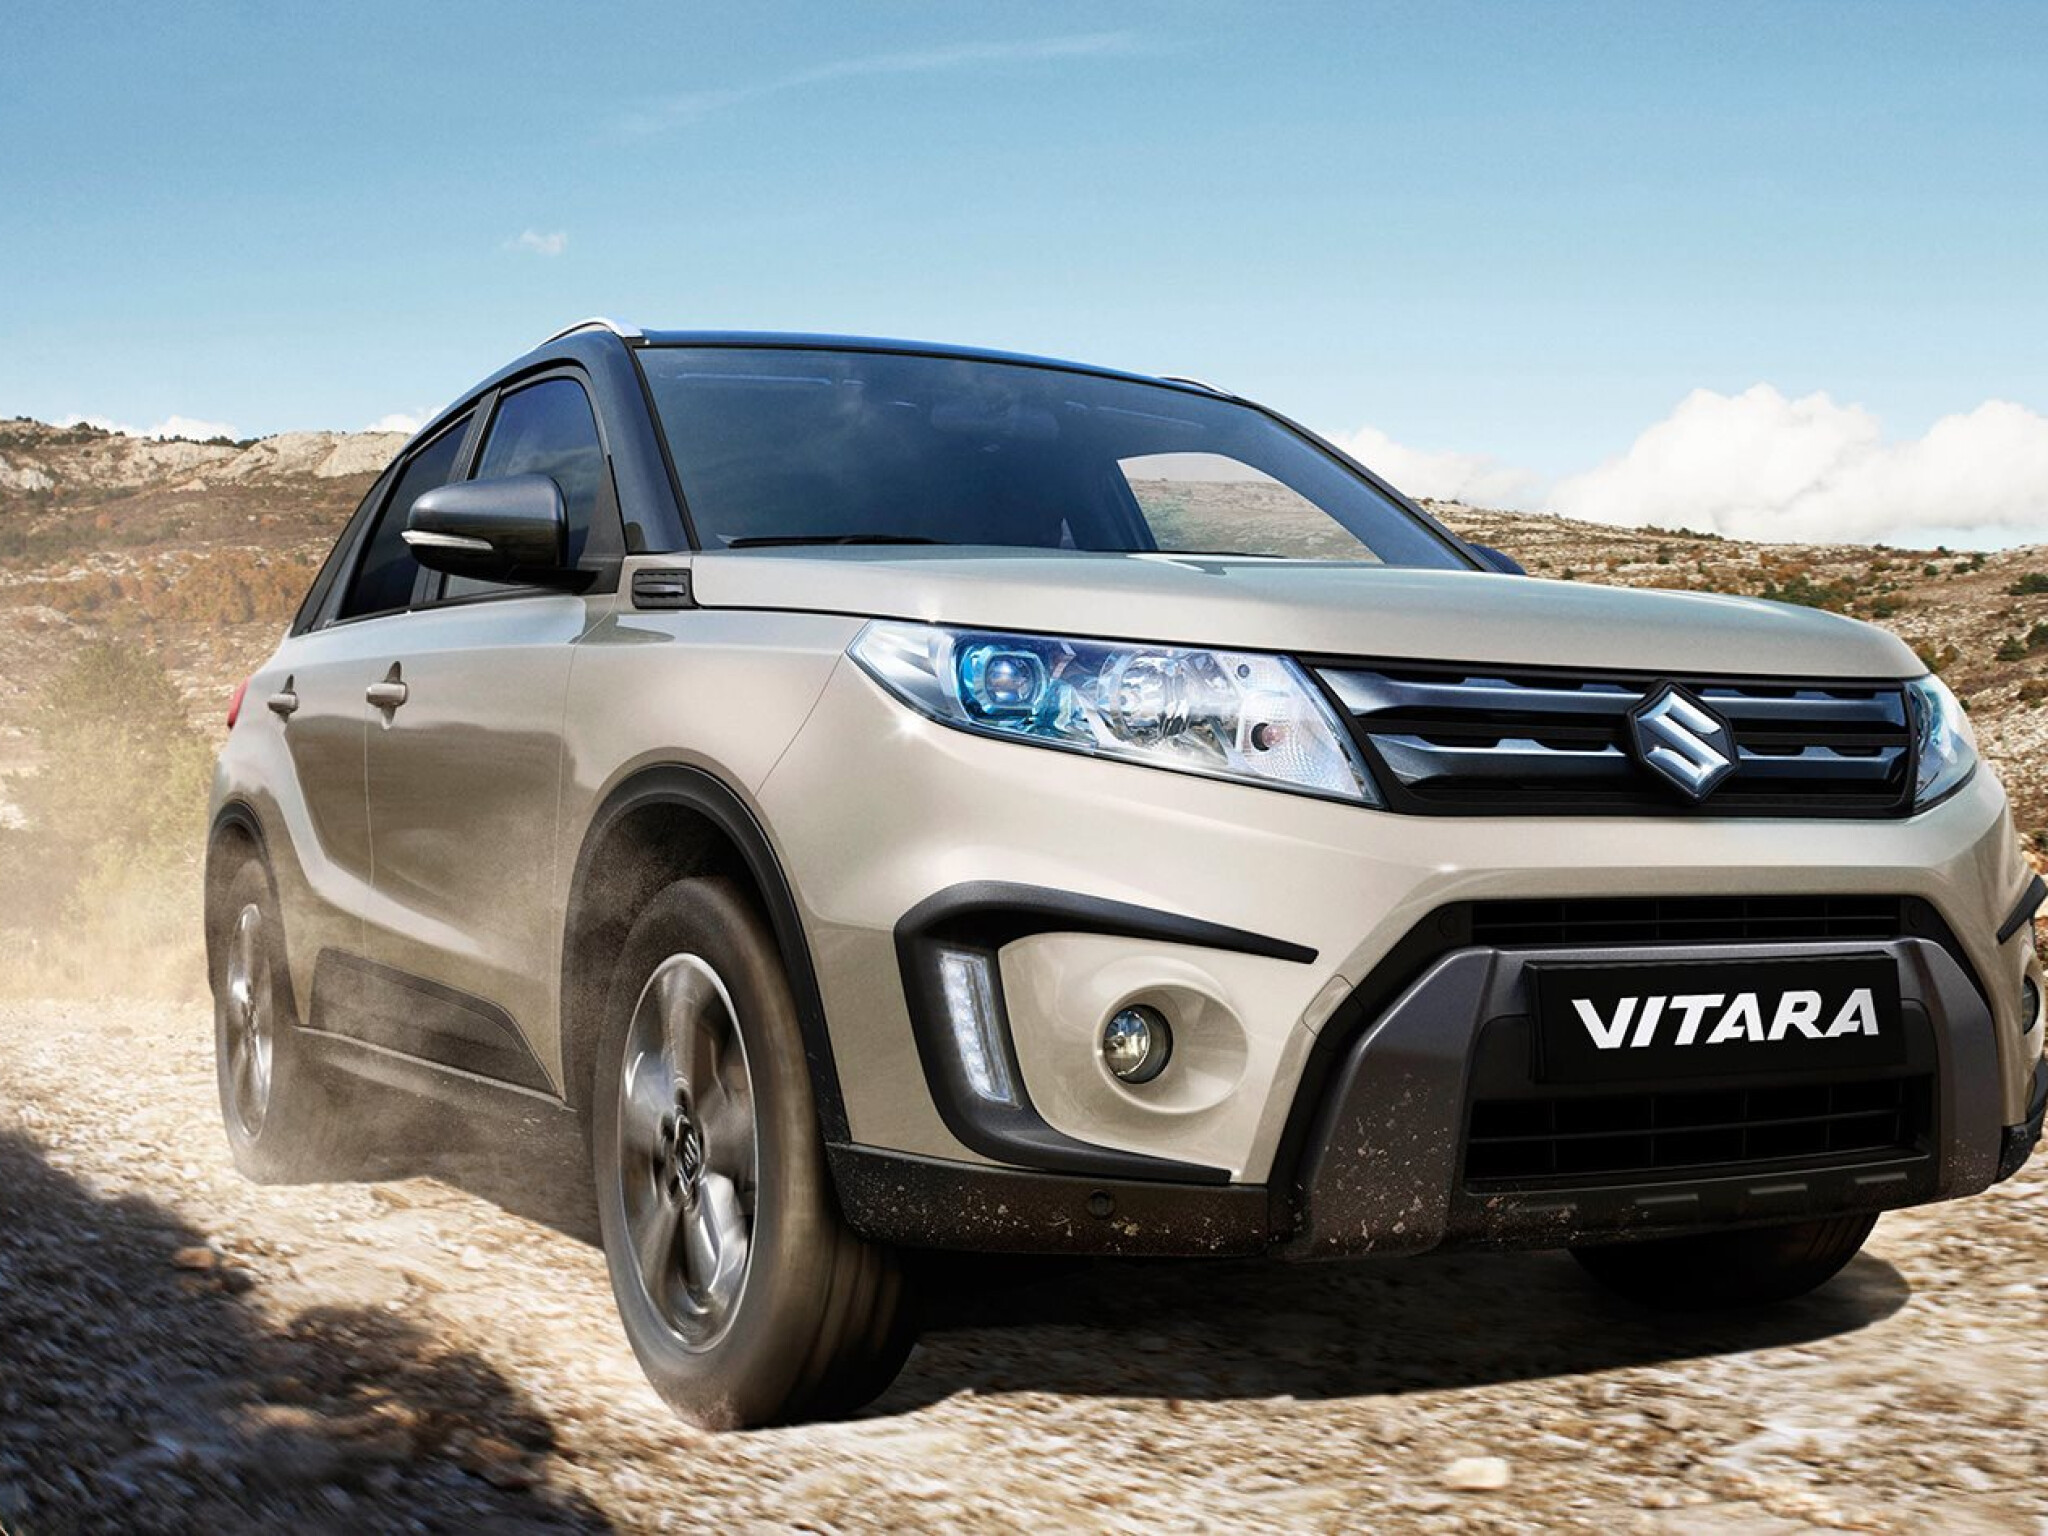 2015 Suzuki Vitara review